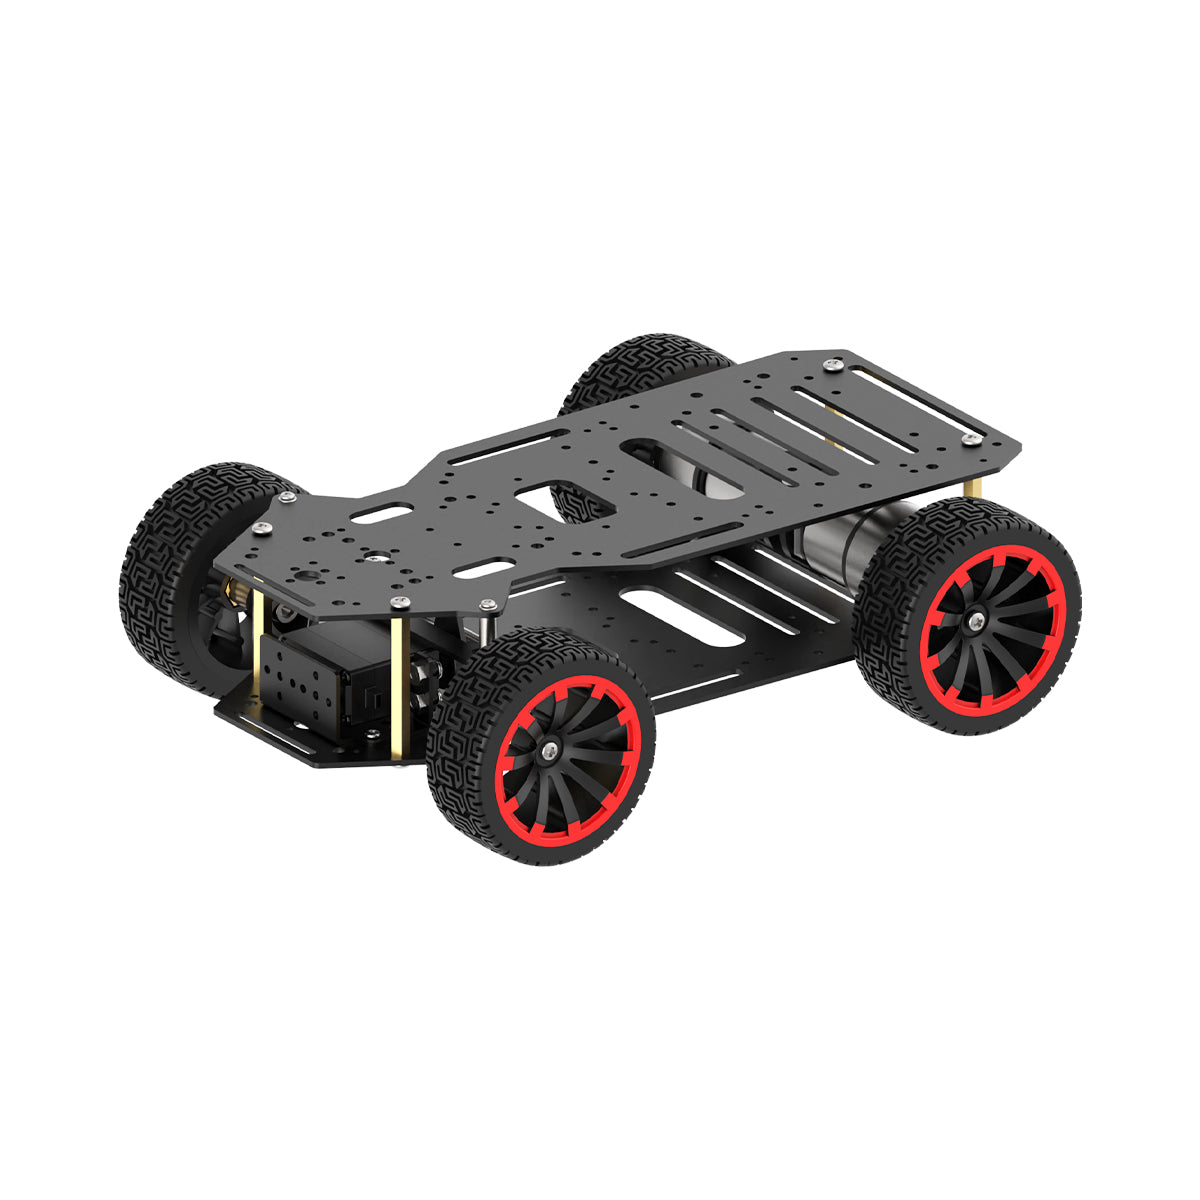 Ackerman Intelligent Car/Metal Chassis/Dual Encoder Motor/Front Wheel Servo Steering/ROS Robot